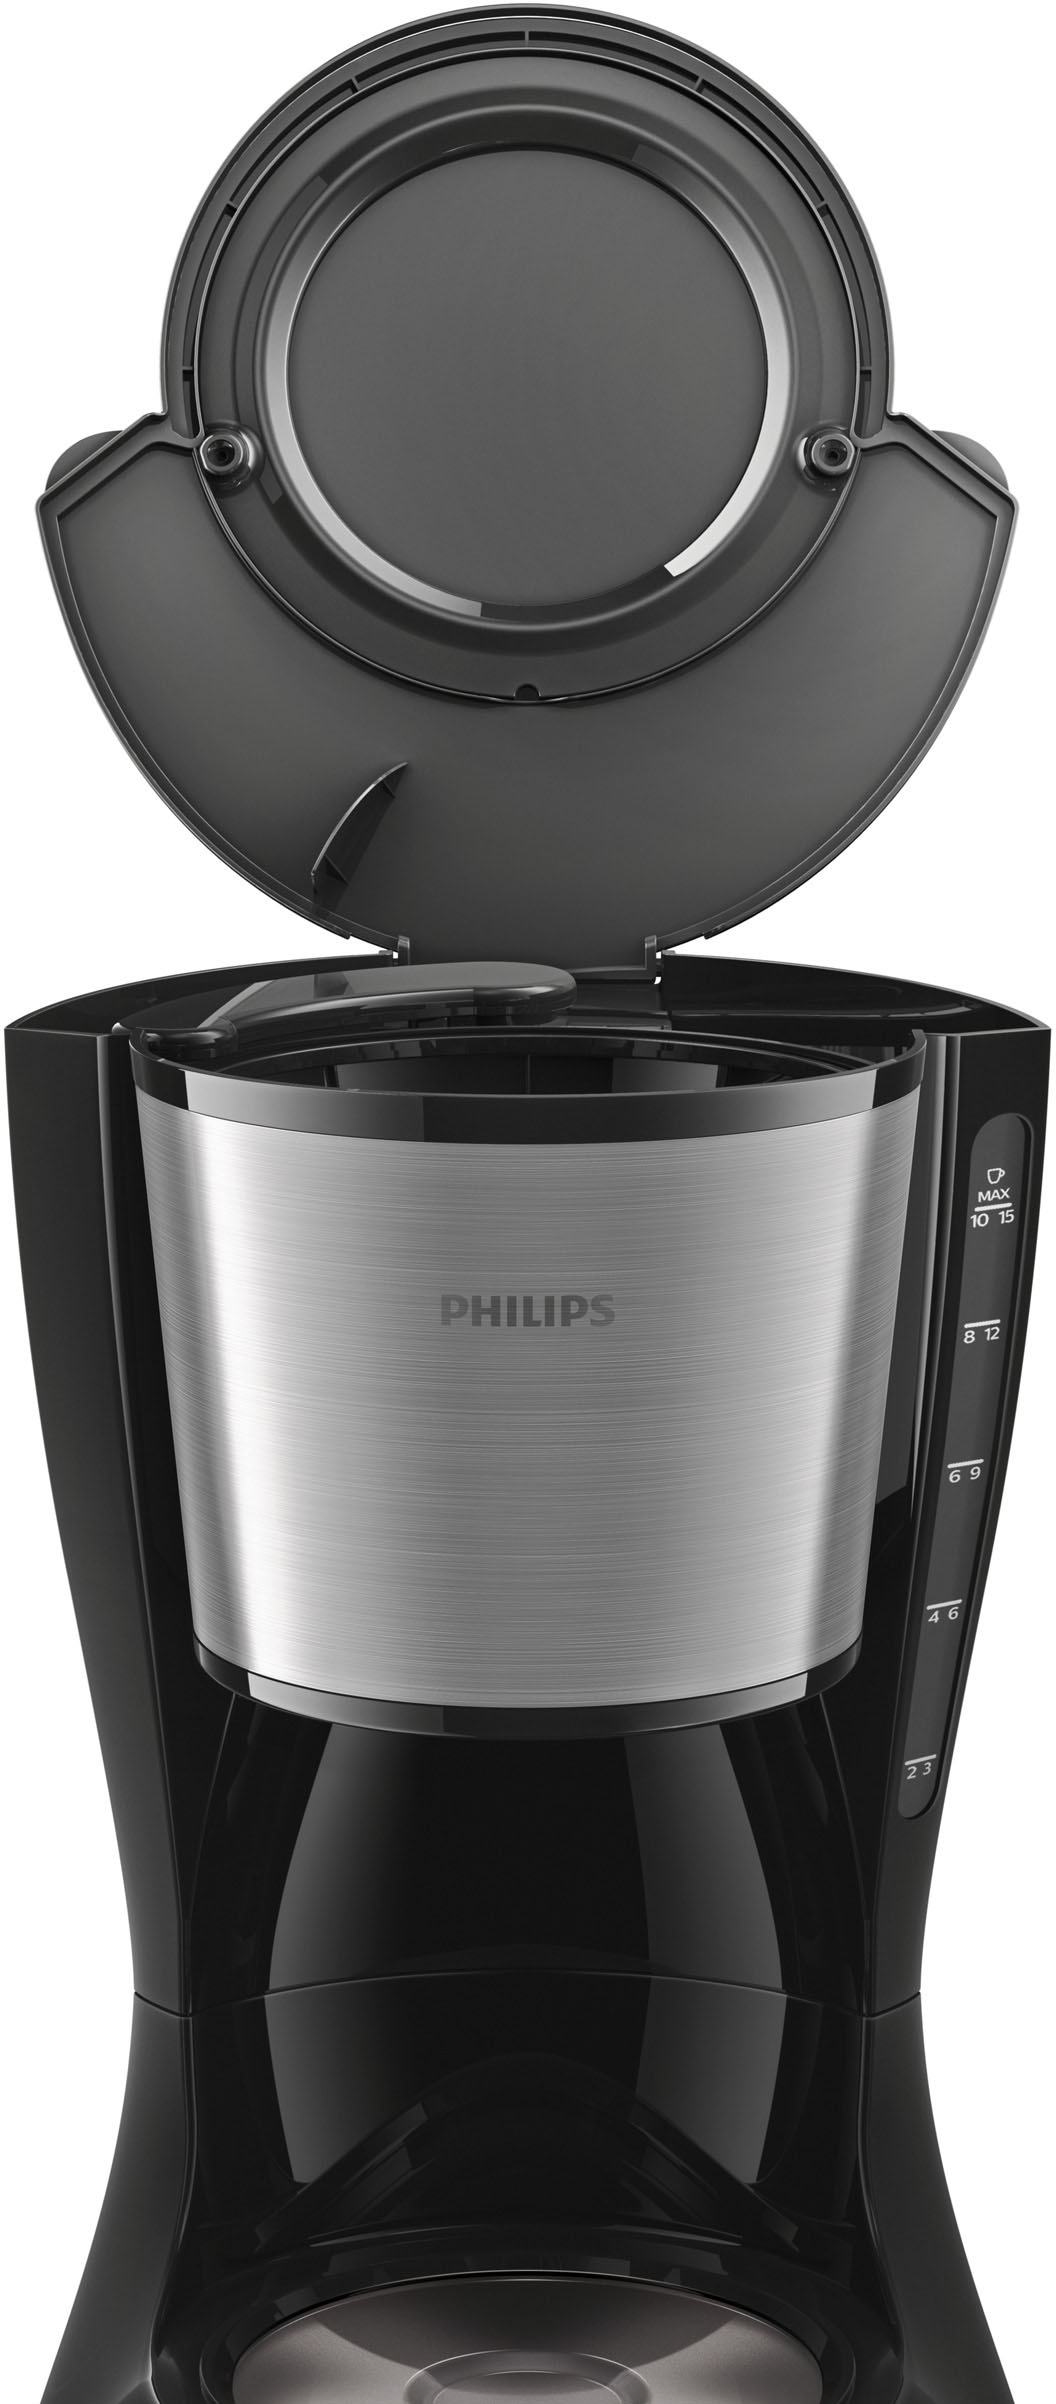 Philips Filterkaffeemaschine »HD7462/20«, 1,2 l Kaffeekanne, Papierfilter, 1x4, Tropfstopp und Abschaltautomatik